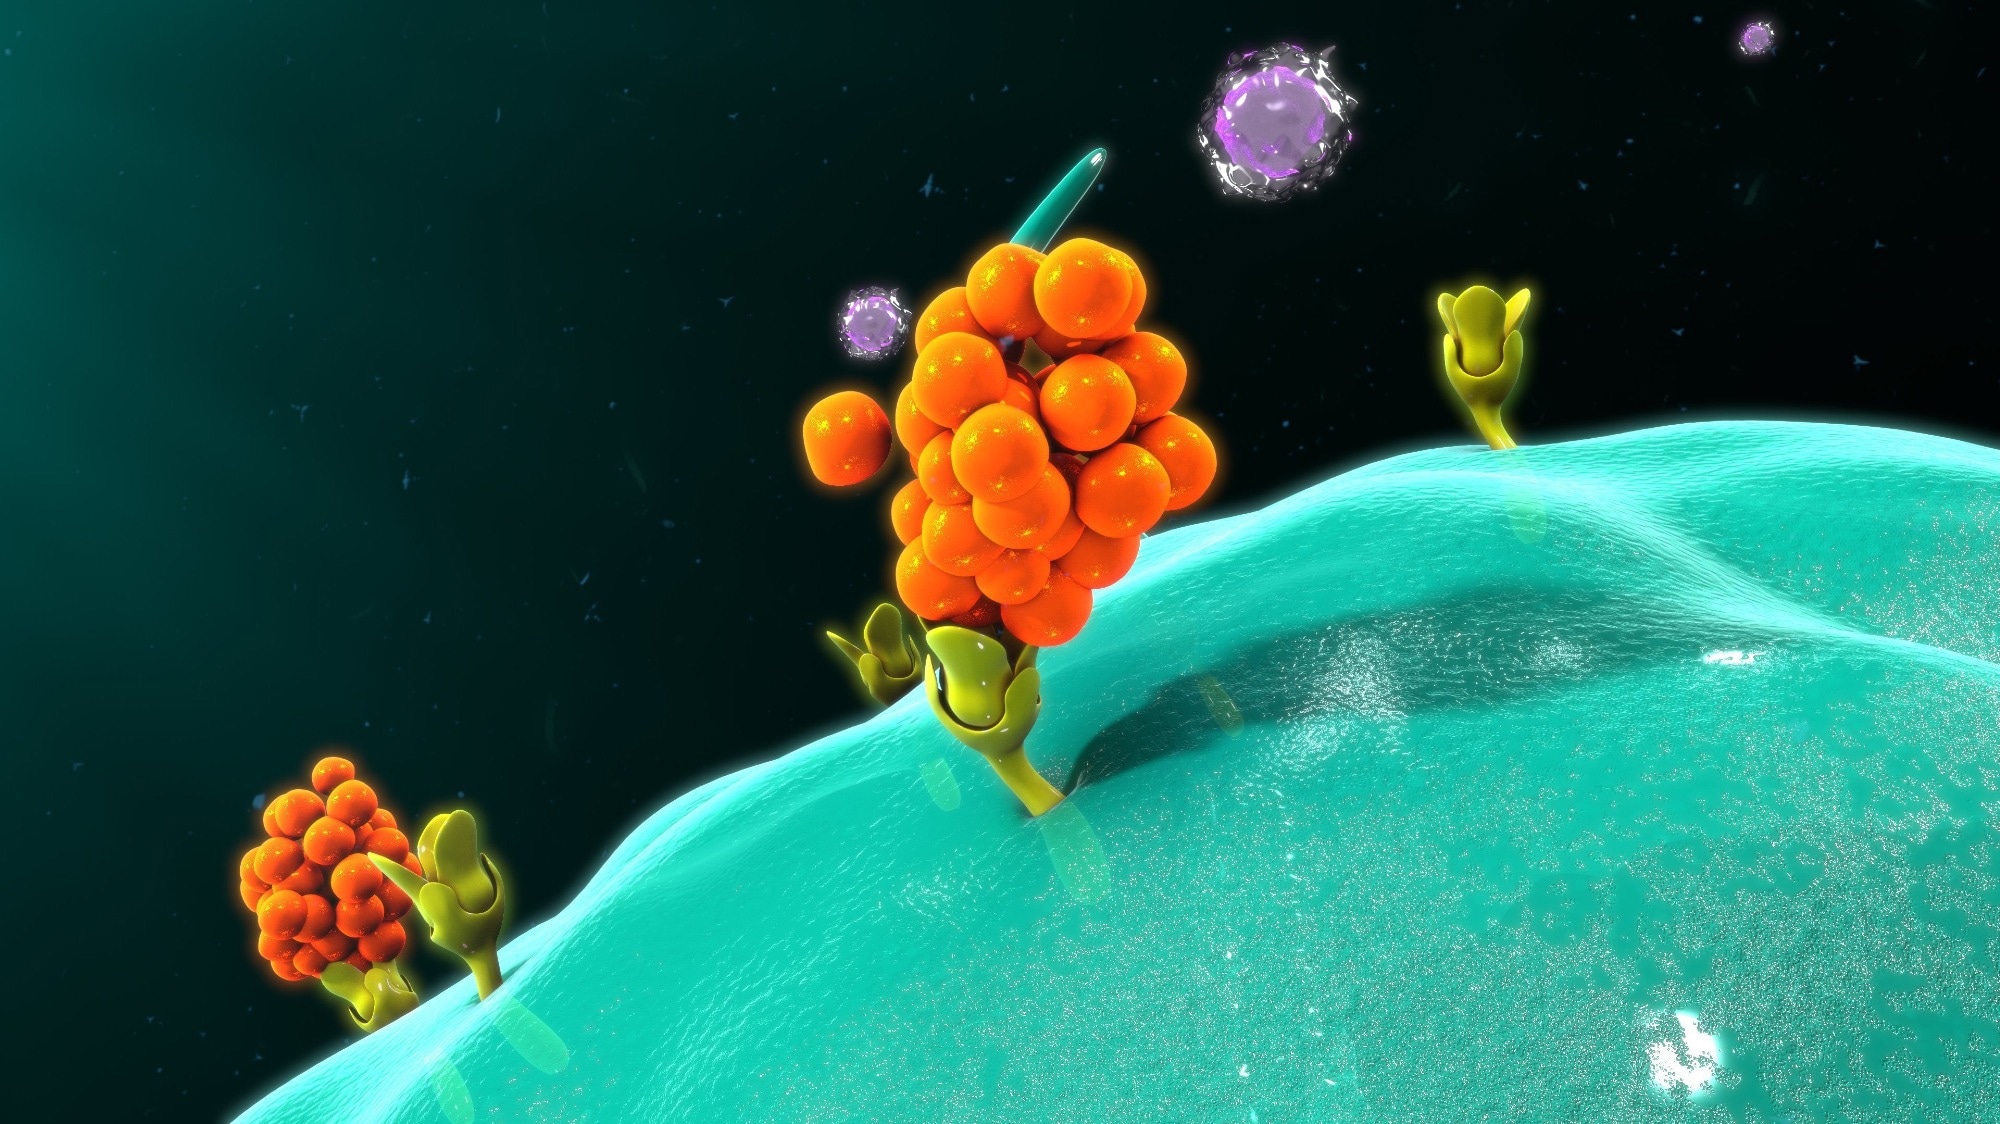 Macrophage releasing cytokines Image Credit: sciencepics / Shutterstock